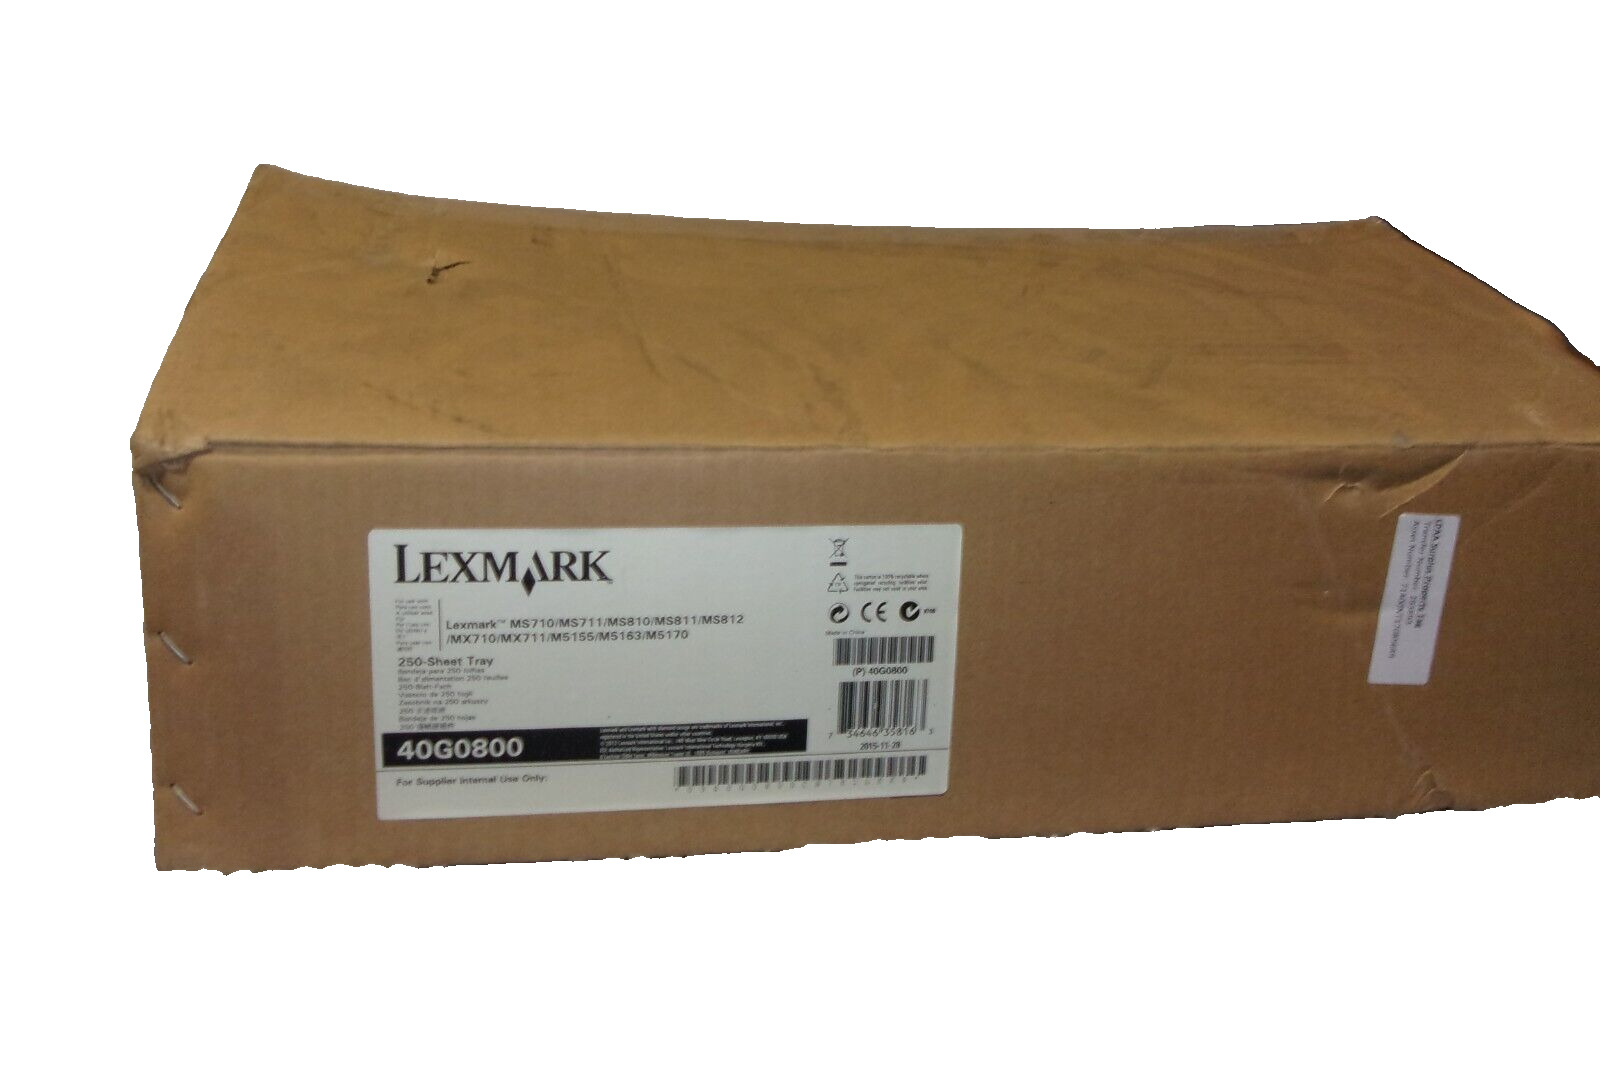 LEXMARK 40G0800 250- Sheet Tray MS710 MS711 MS810 MS811 MS812 MX710 MX711